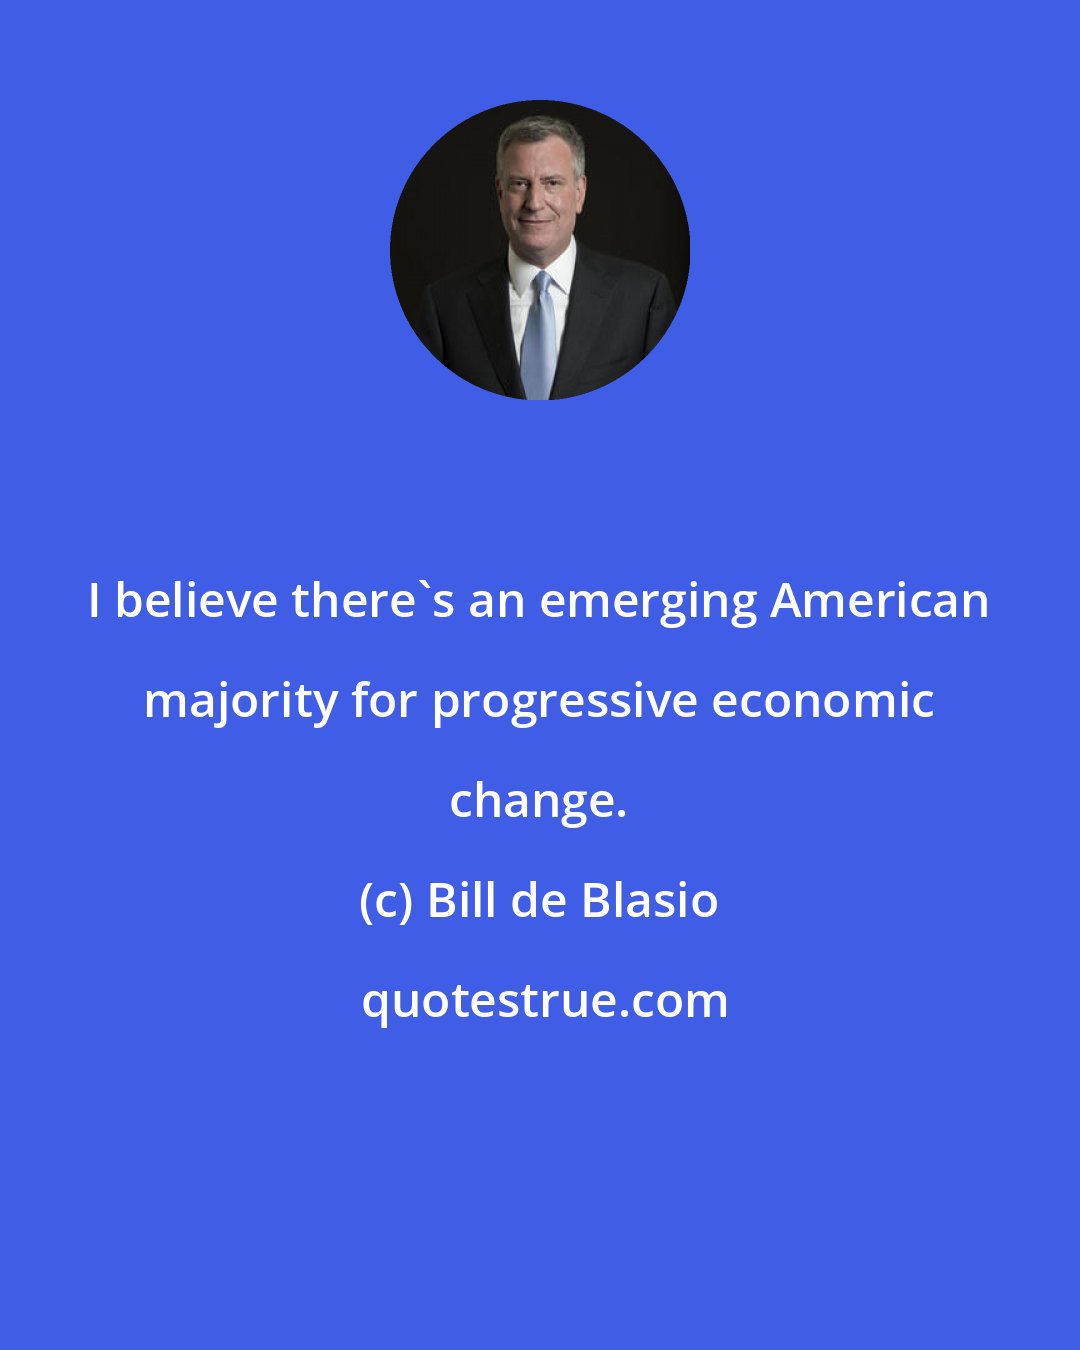 Bill de Blasio: I believe there's an emerging American majority for progressive economic change.